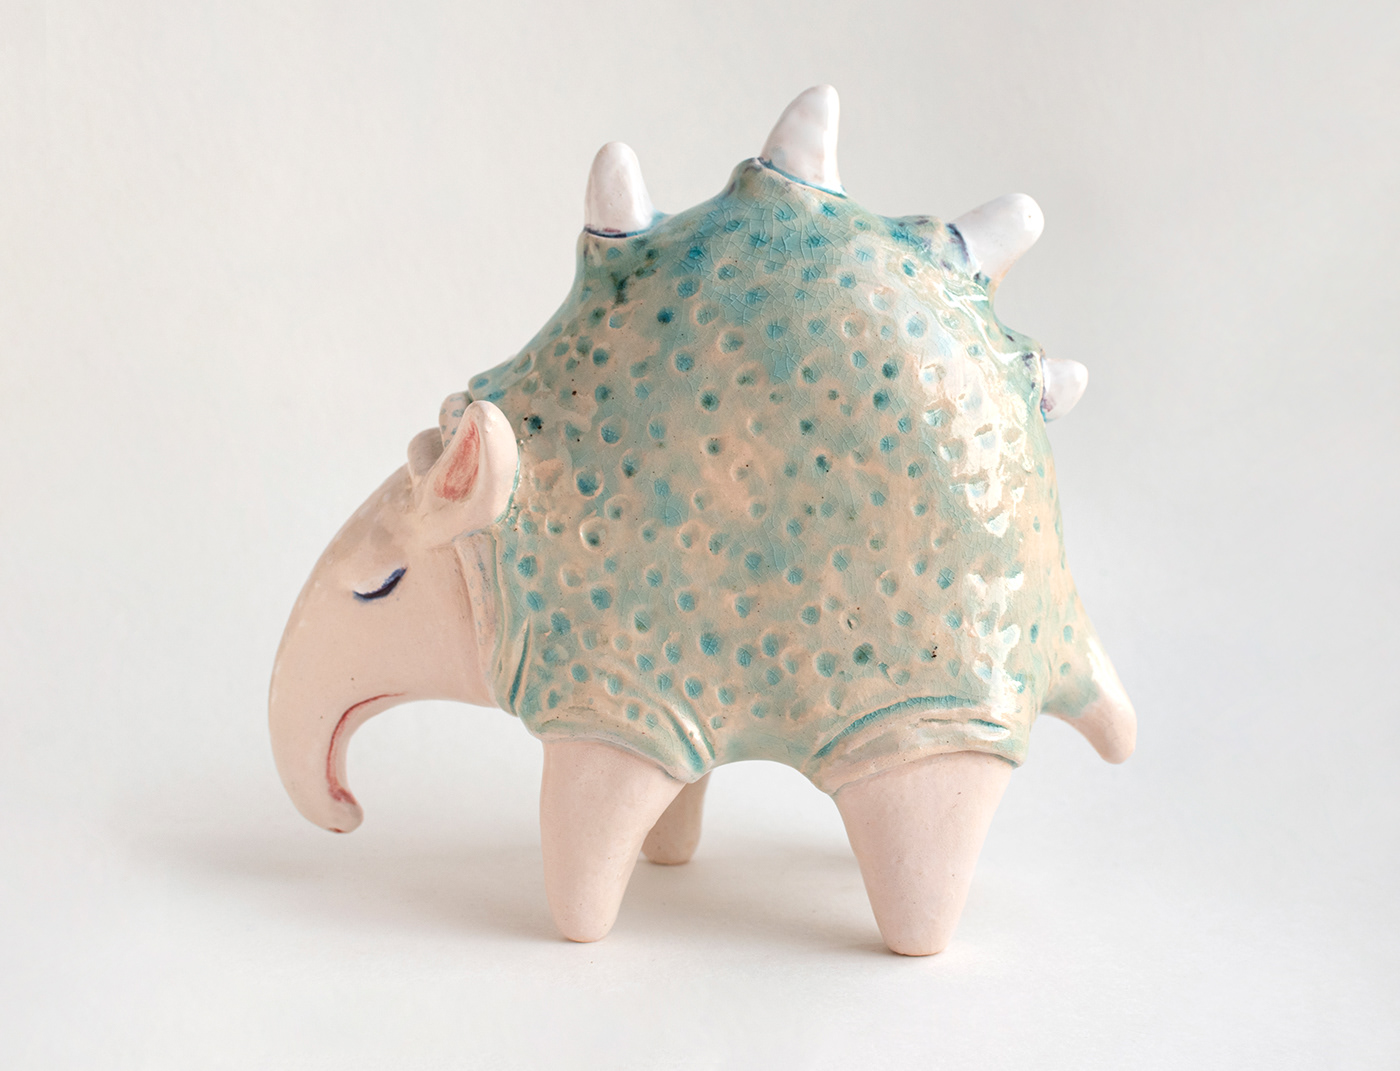 animals ceramic art ceramics  creatures cute dream fantasyart handmade imaginary sculpture